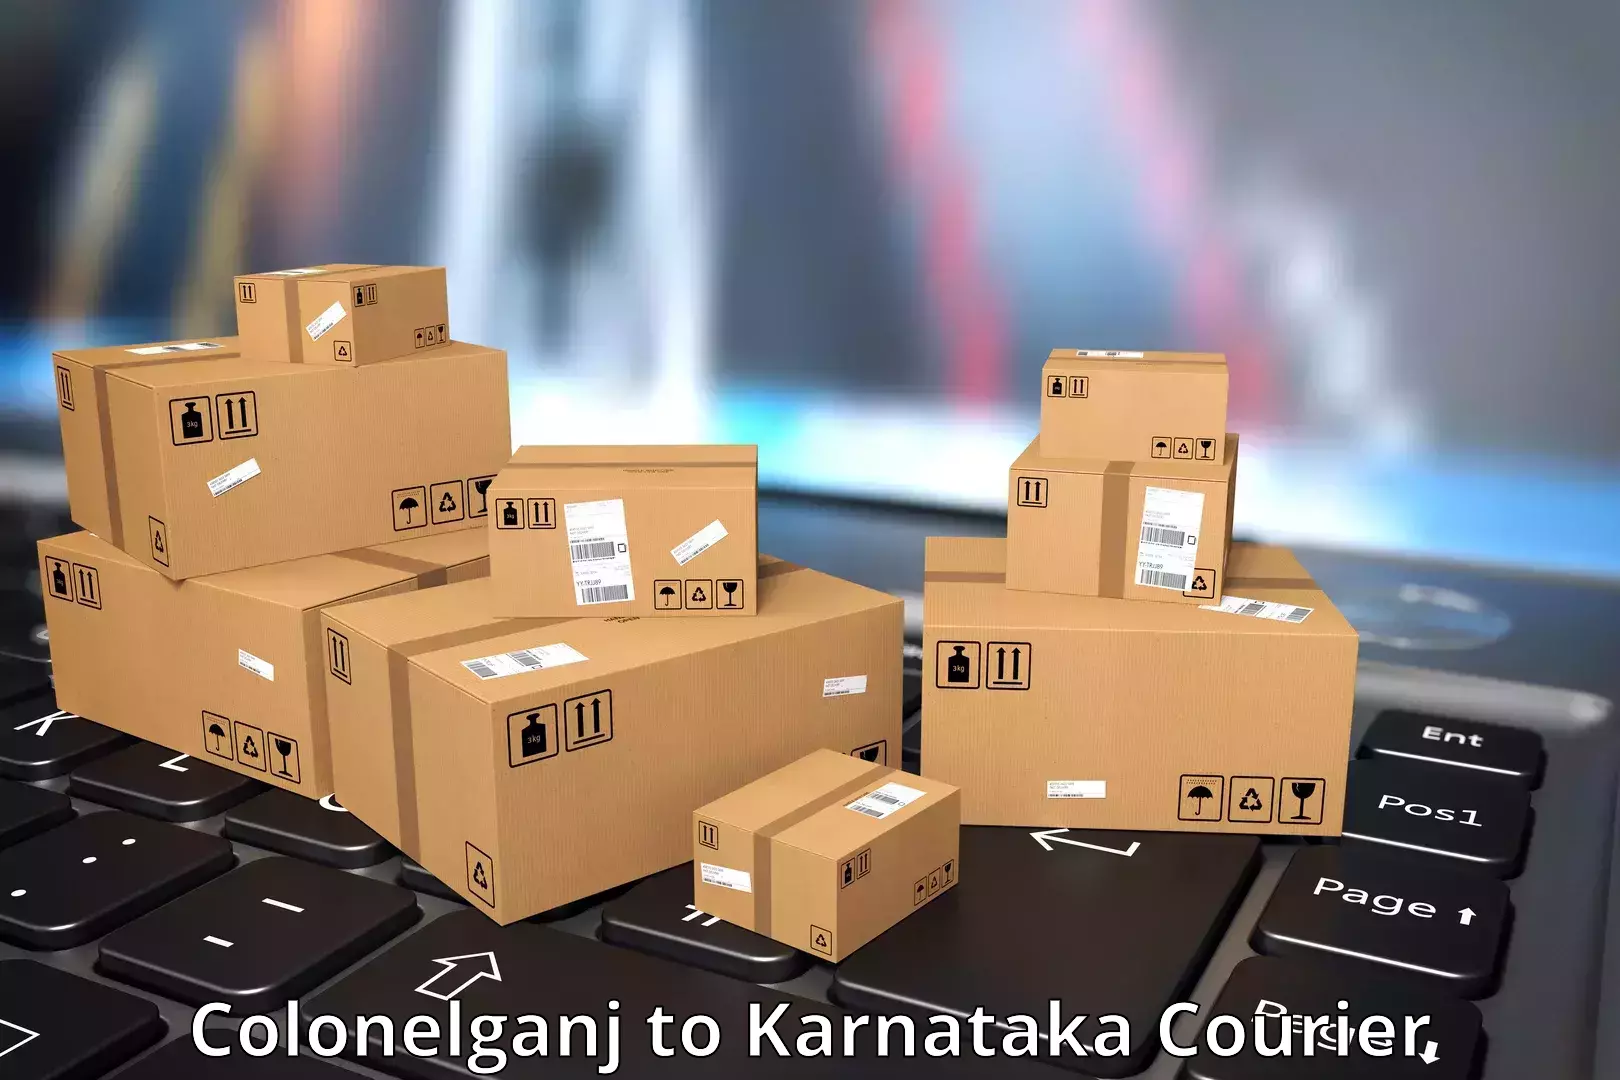 On-demand courier in Colonelganj to Karnataka